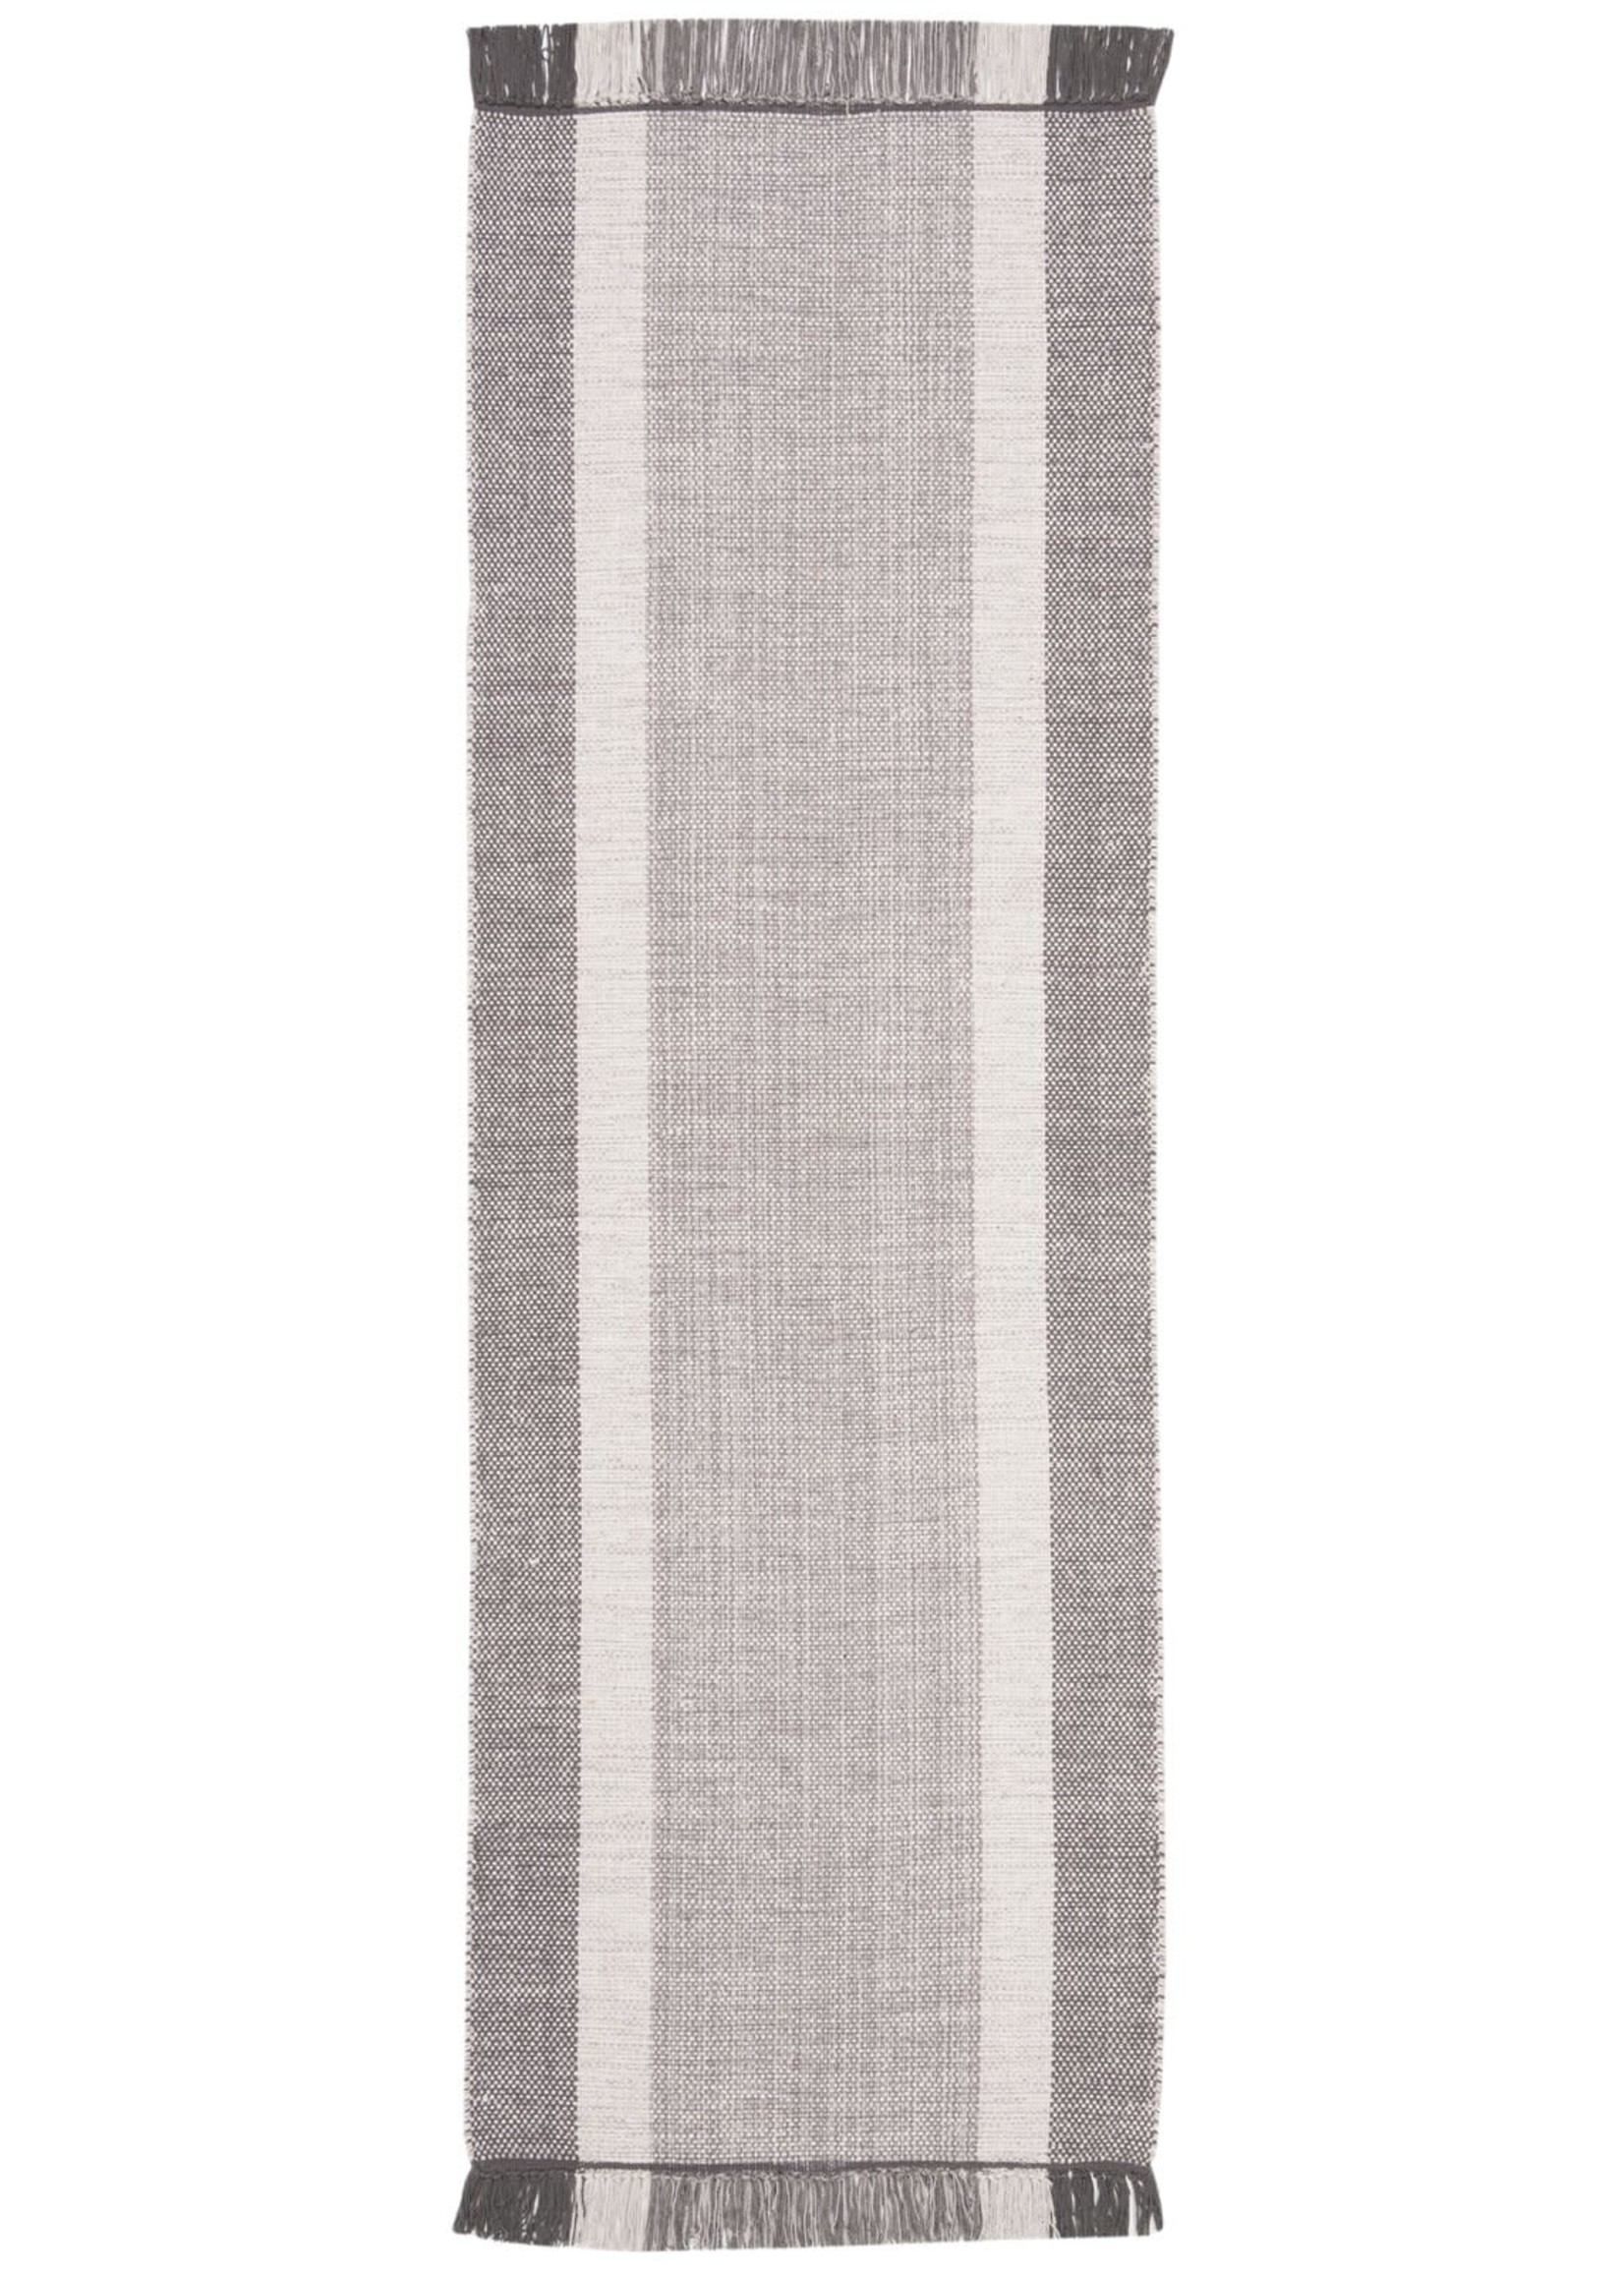 *2'3 x 7' Zoltan Handmade Flatweave Cotton Gray Area Rug